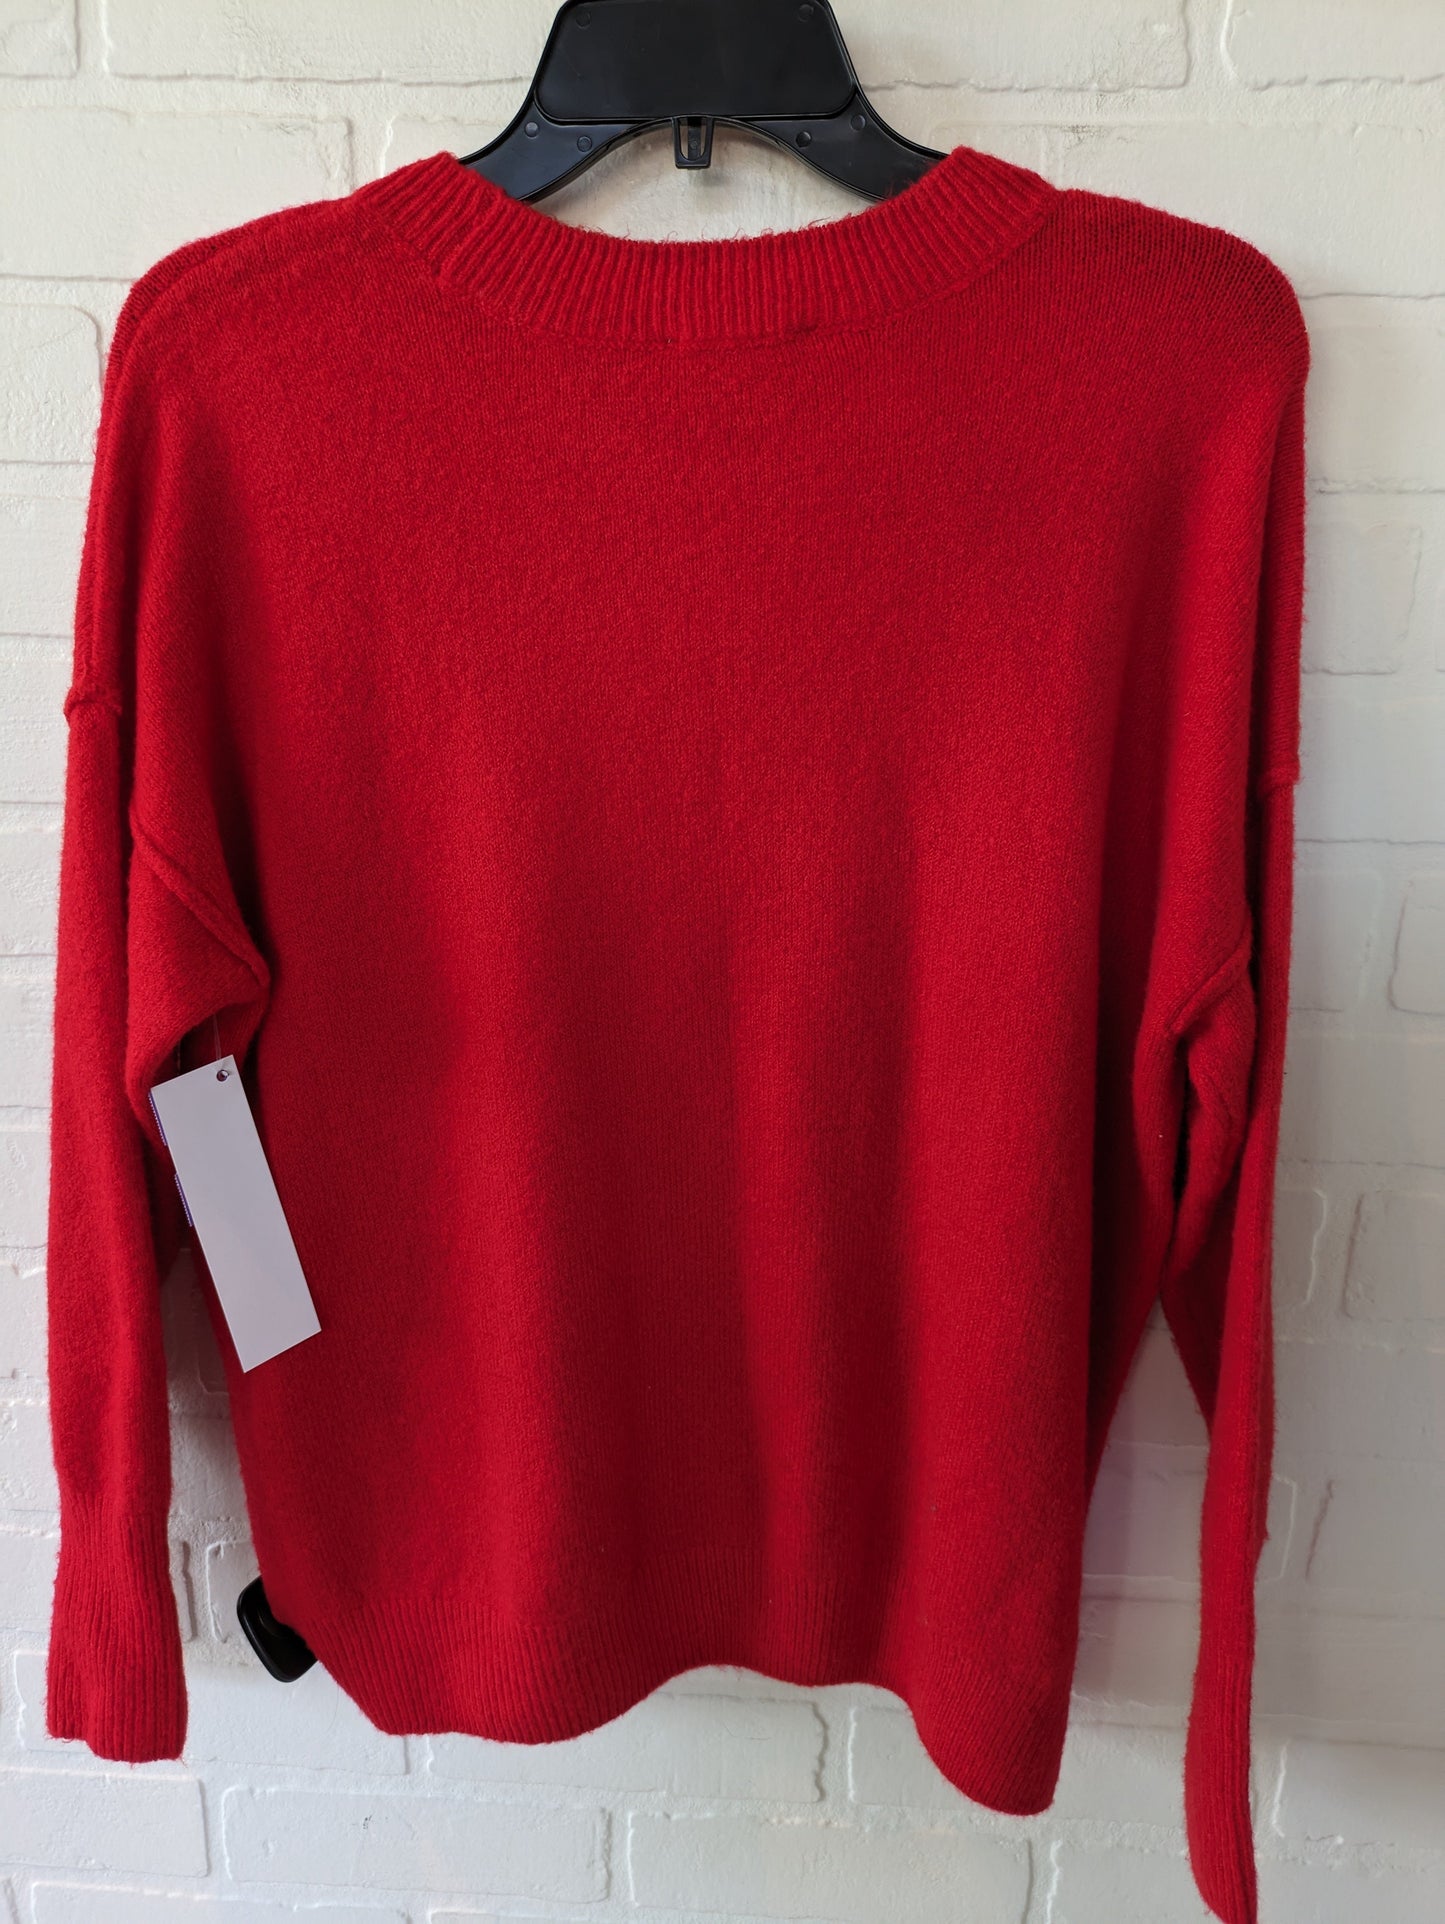 Sweater By Cece  Size: Xs